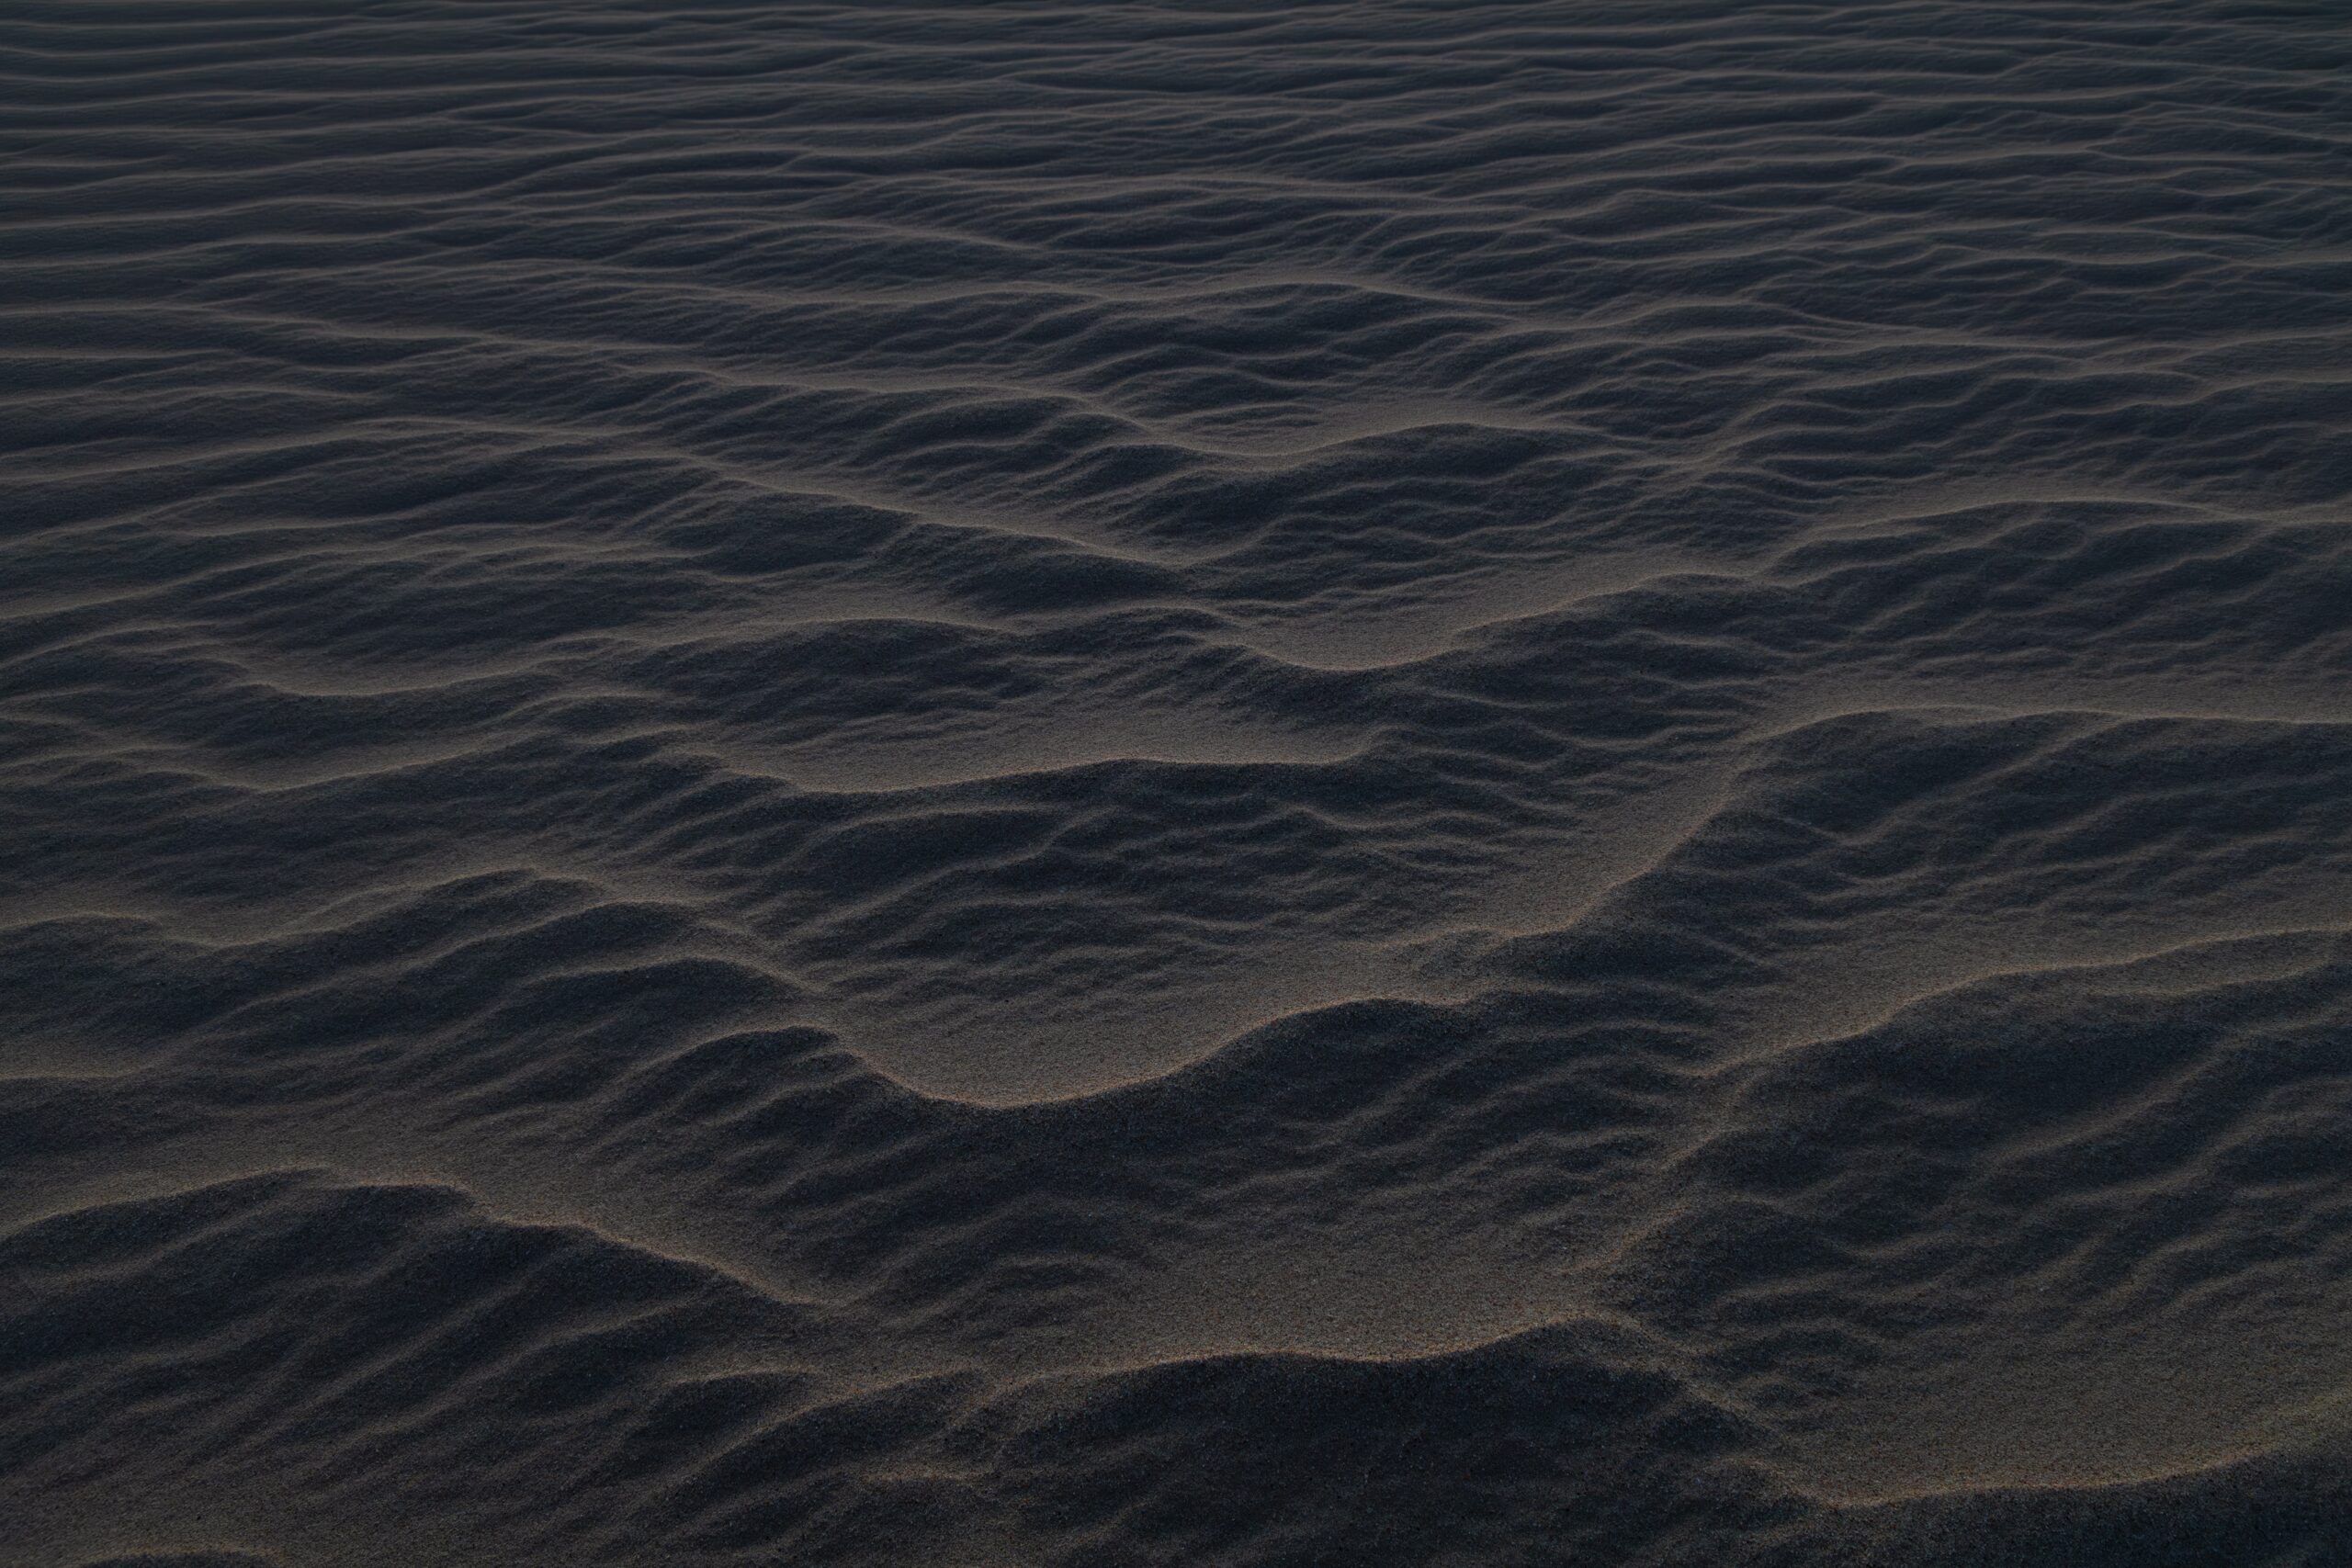 Low-key photograph of sand dunes.